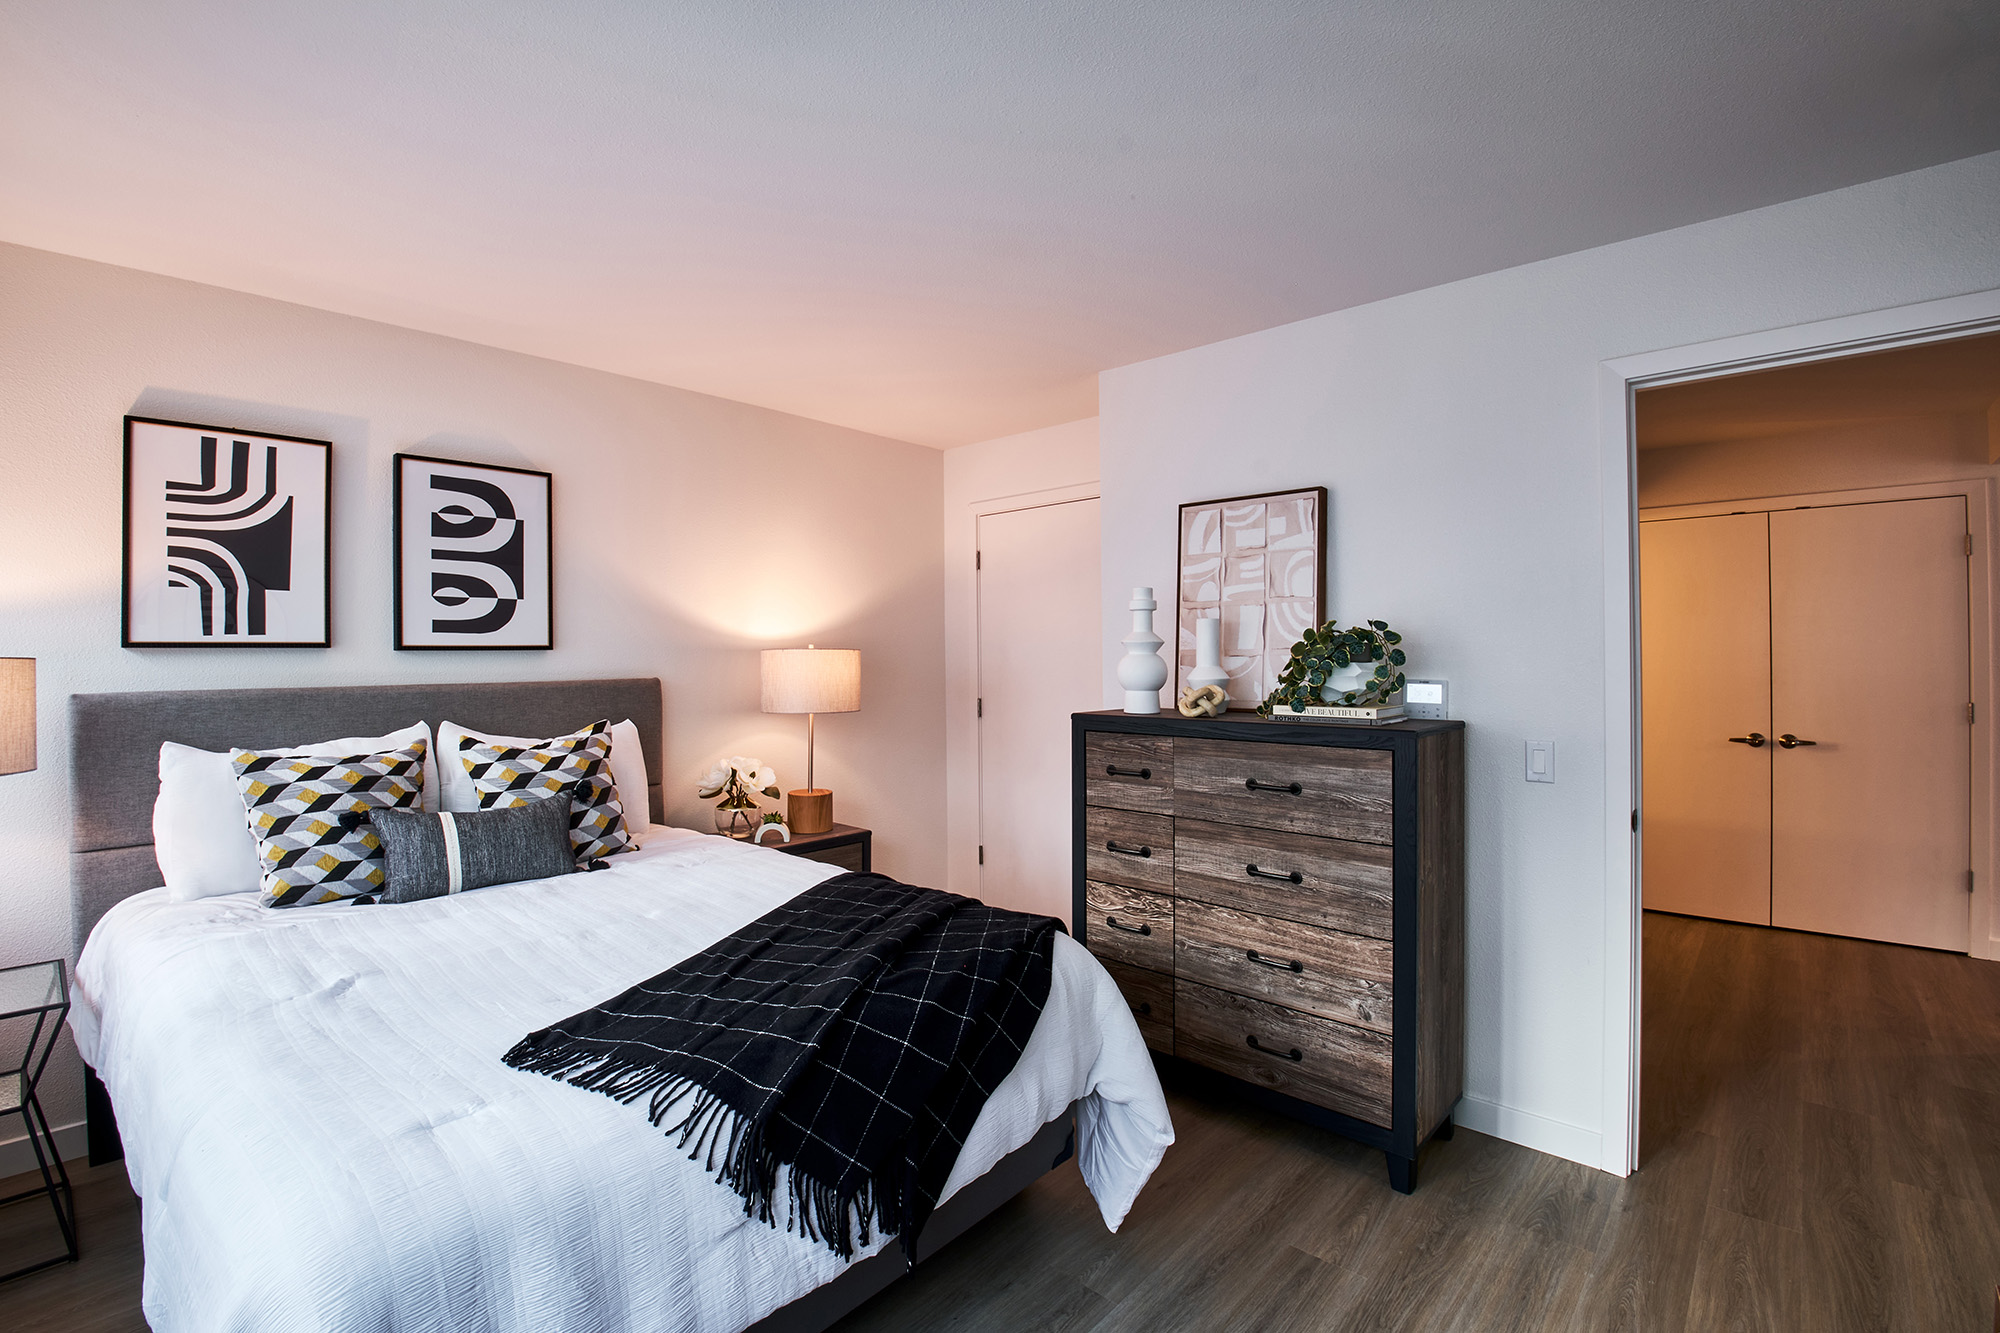 Residence bedroom of adaptive reuse housing